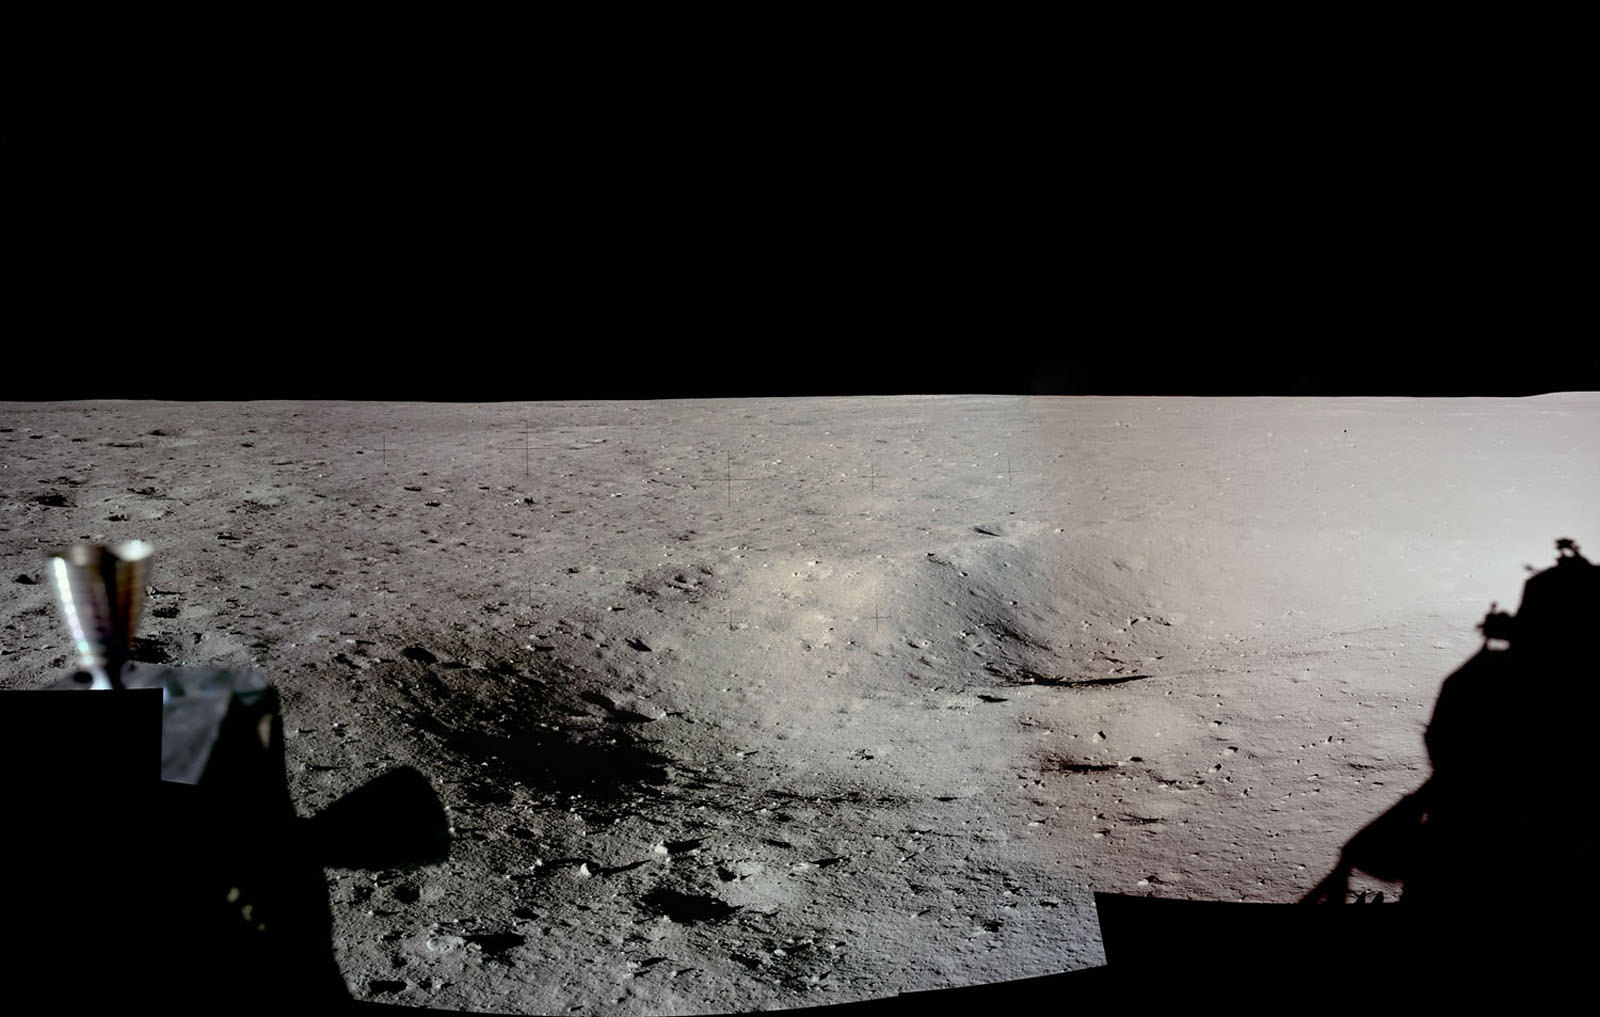 Panorama view of lunar surface